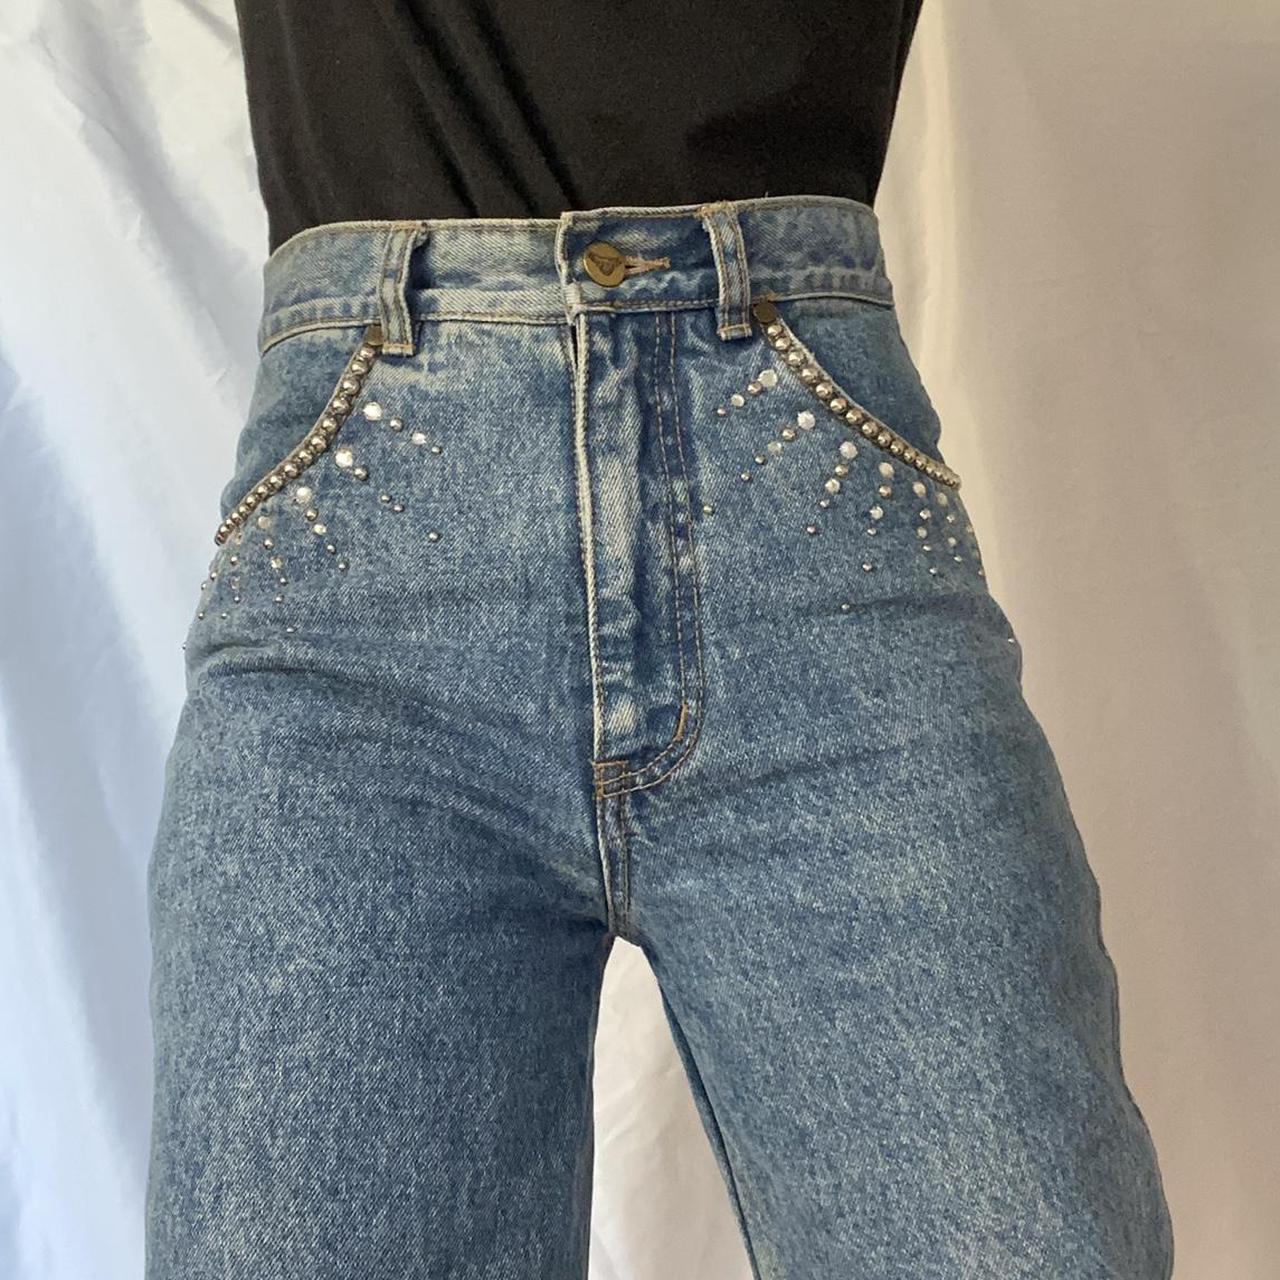 90's rockies jeans